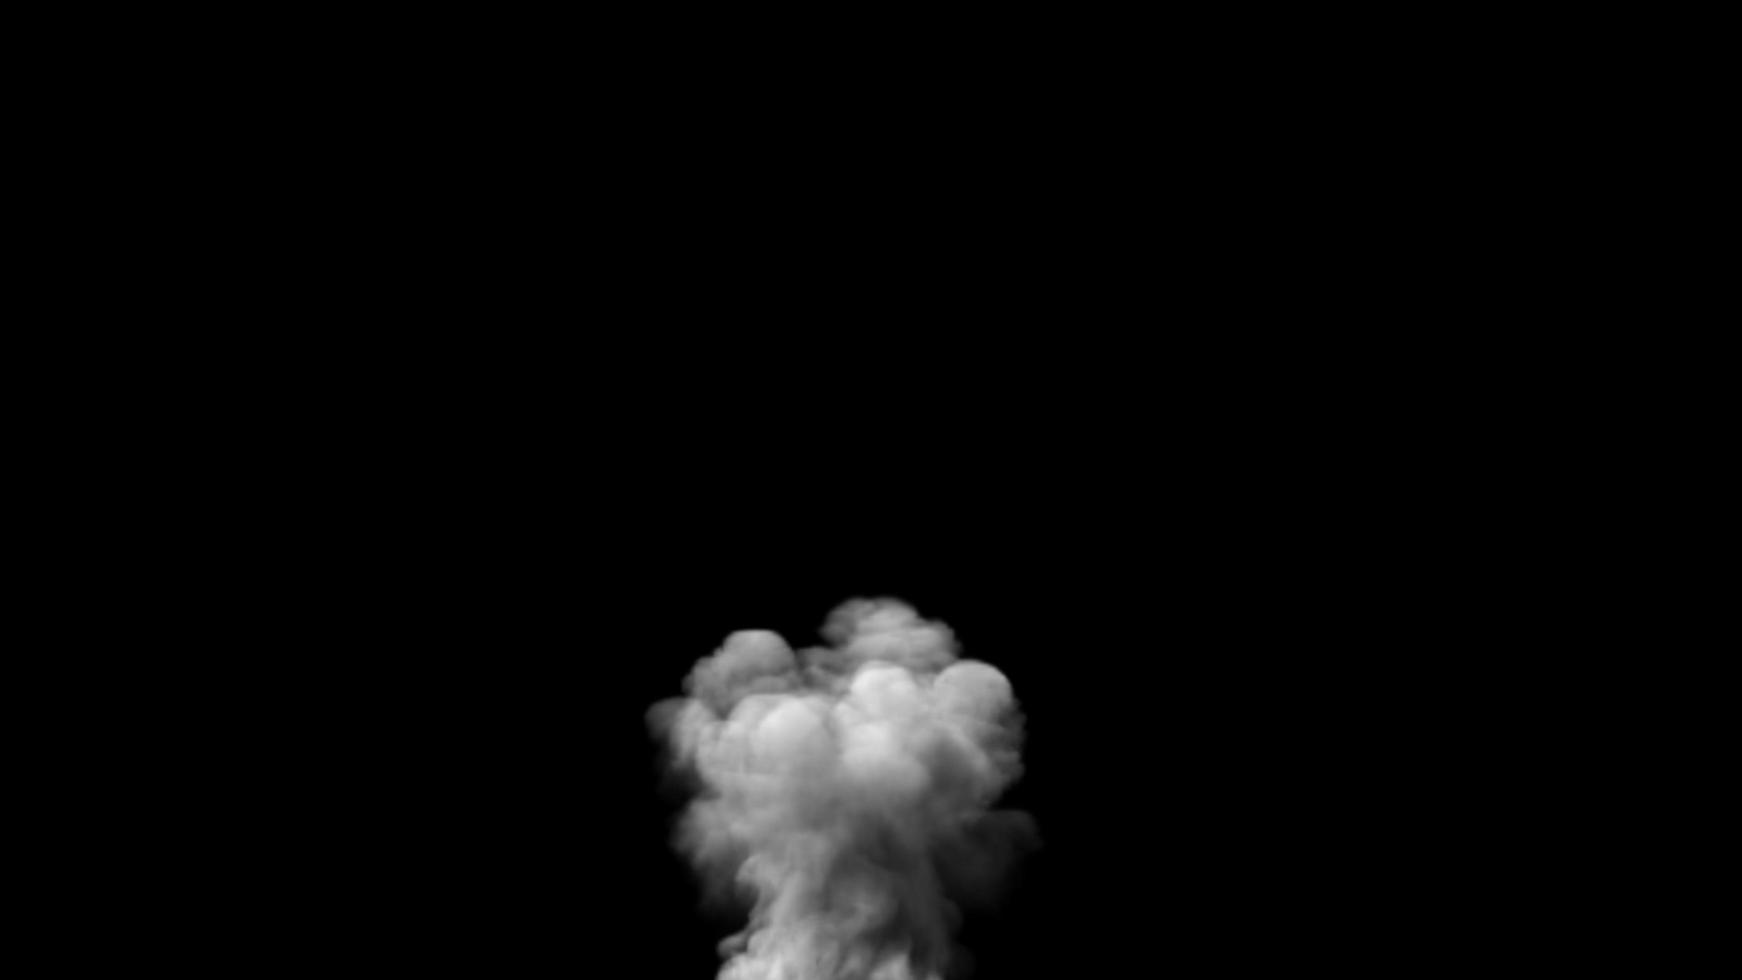 humo sobre fondo negro foto